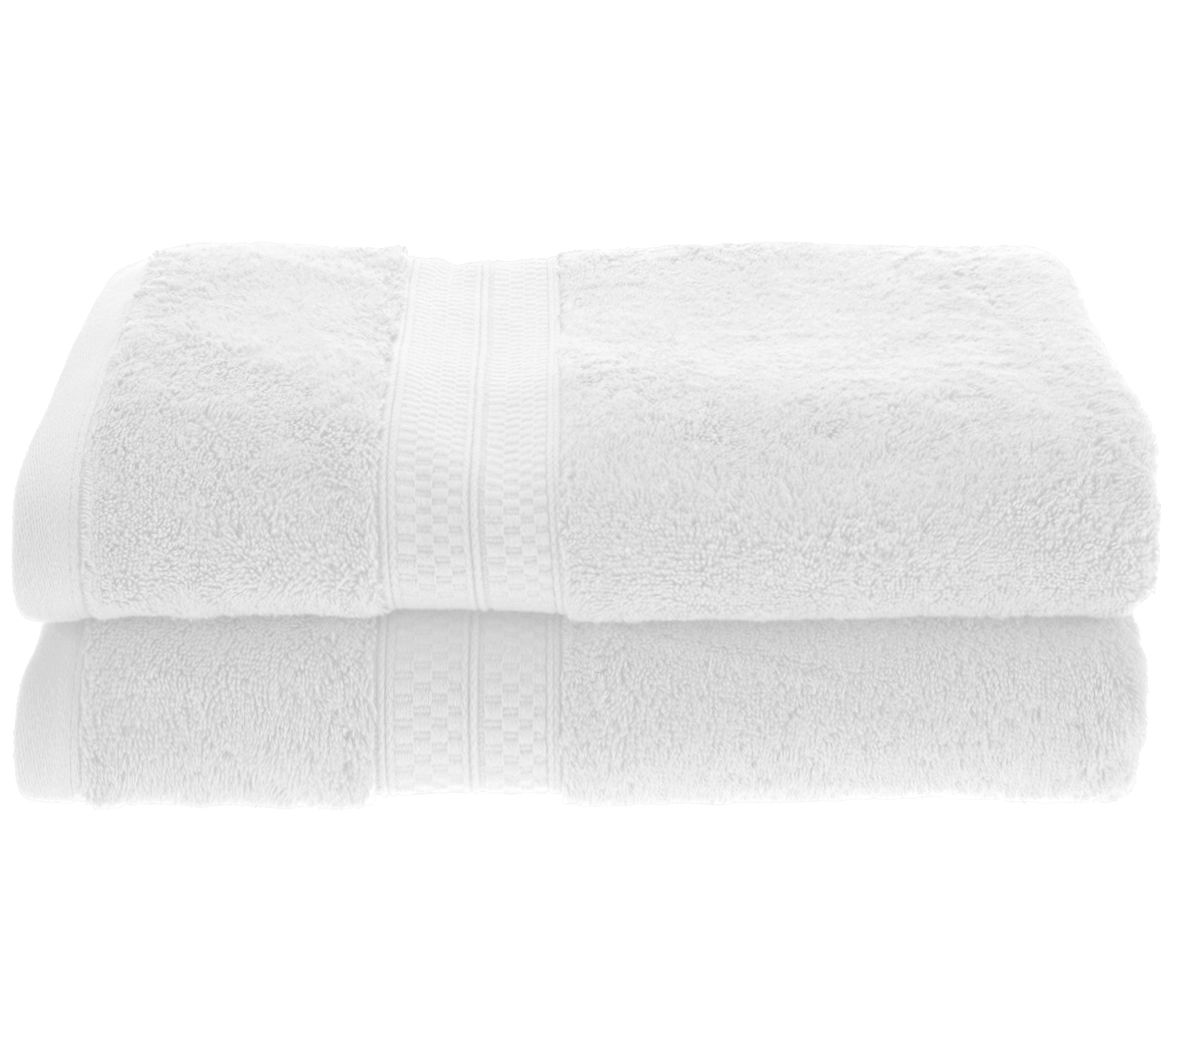 Bamboo Rayon/Cotton Bath Towel Set of 2, 650 GSM Soft